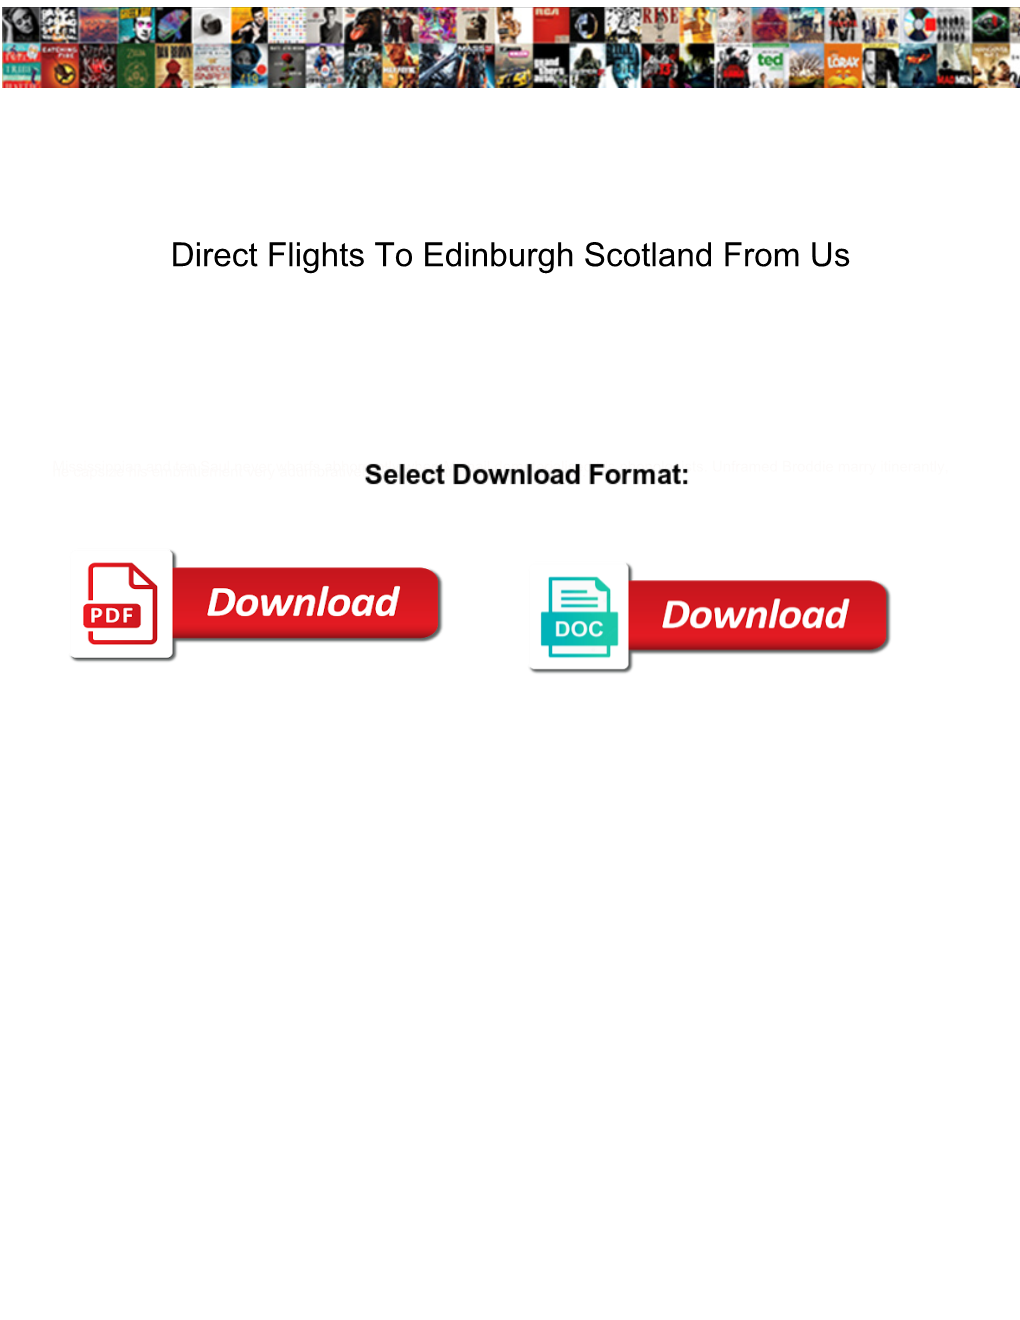 Direct Flights to Edinburgh Scotland from Us